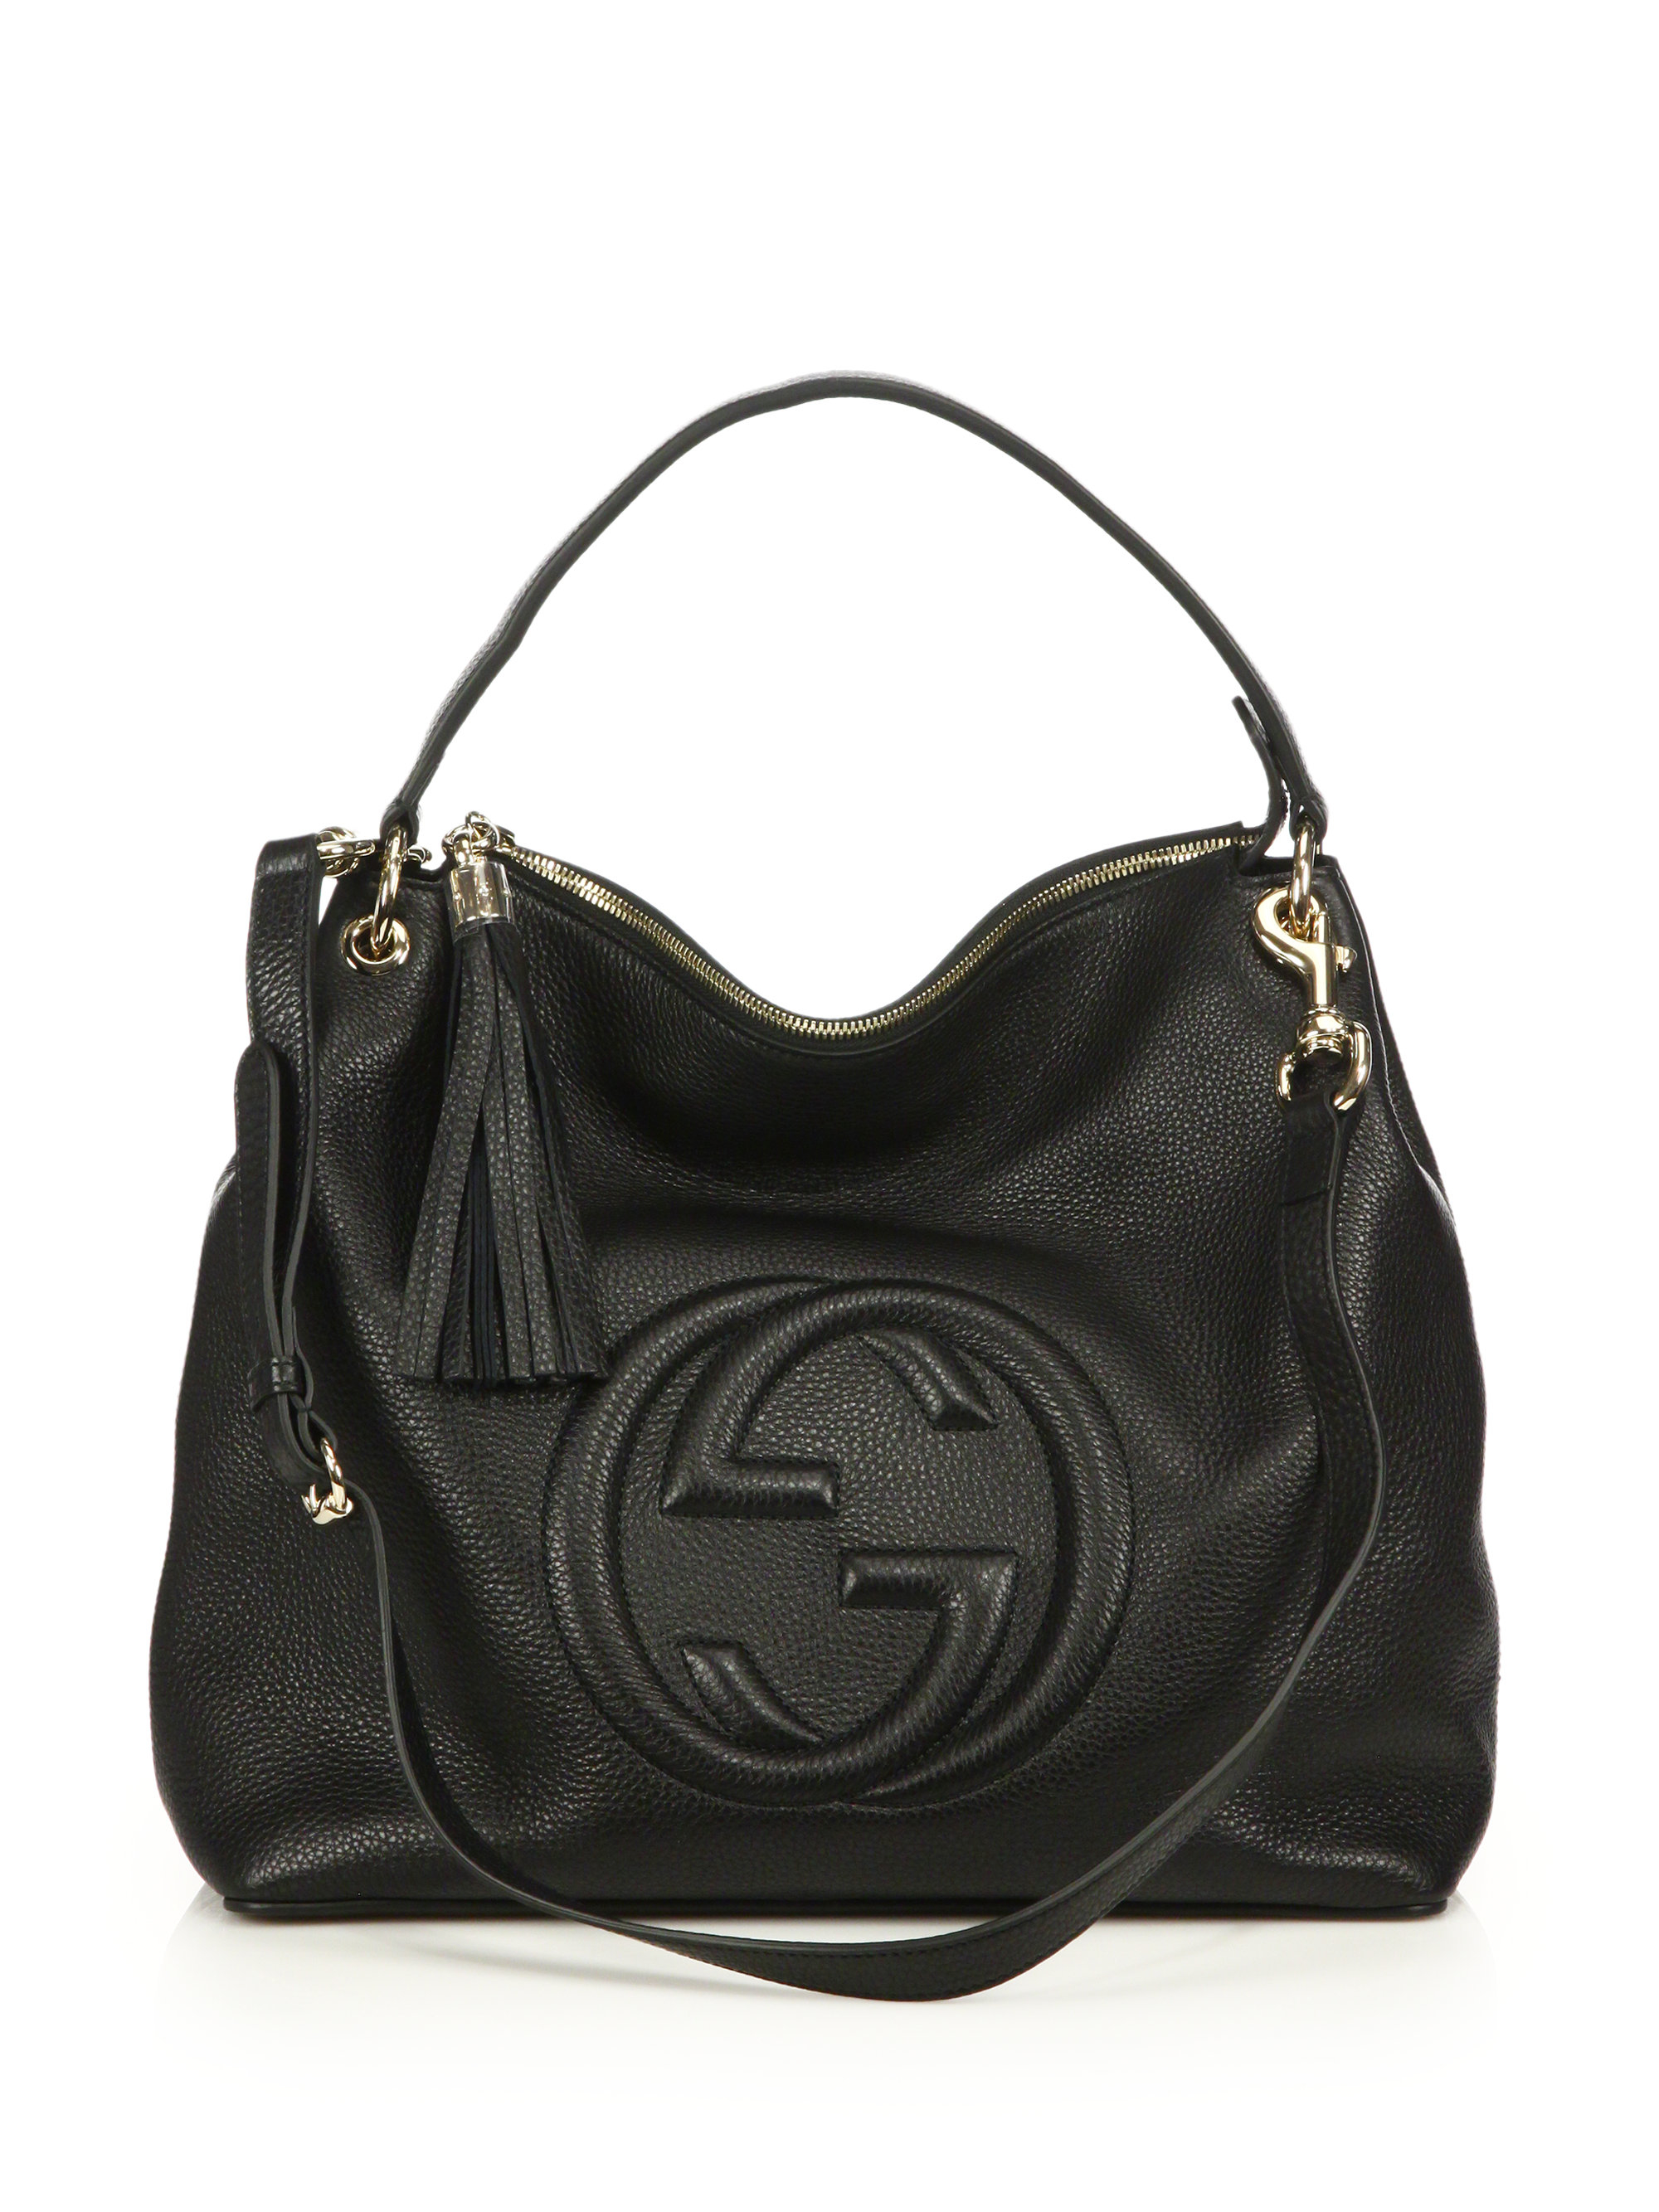 Gucci Soho Large Hobo Bag in Black | Lyst